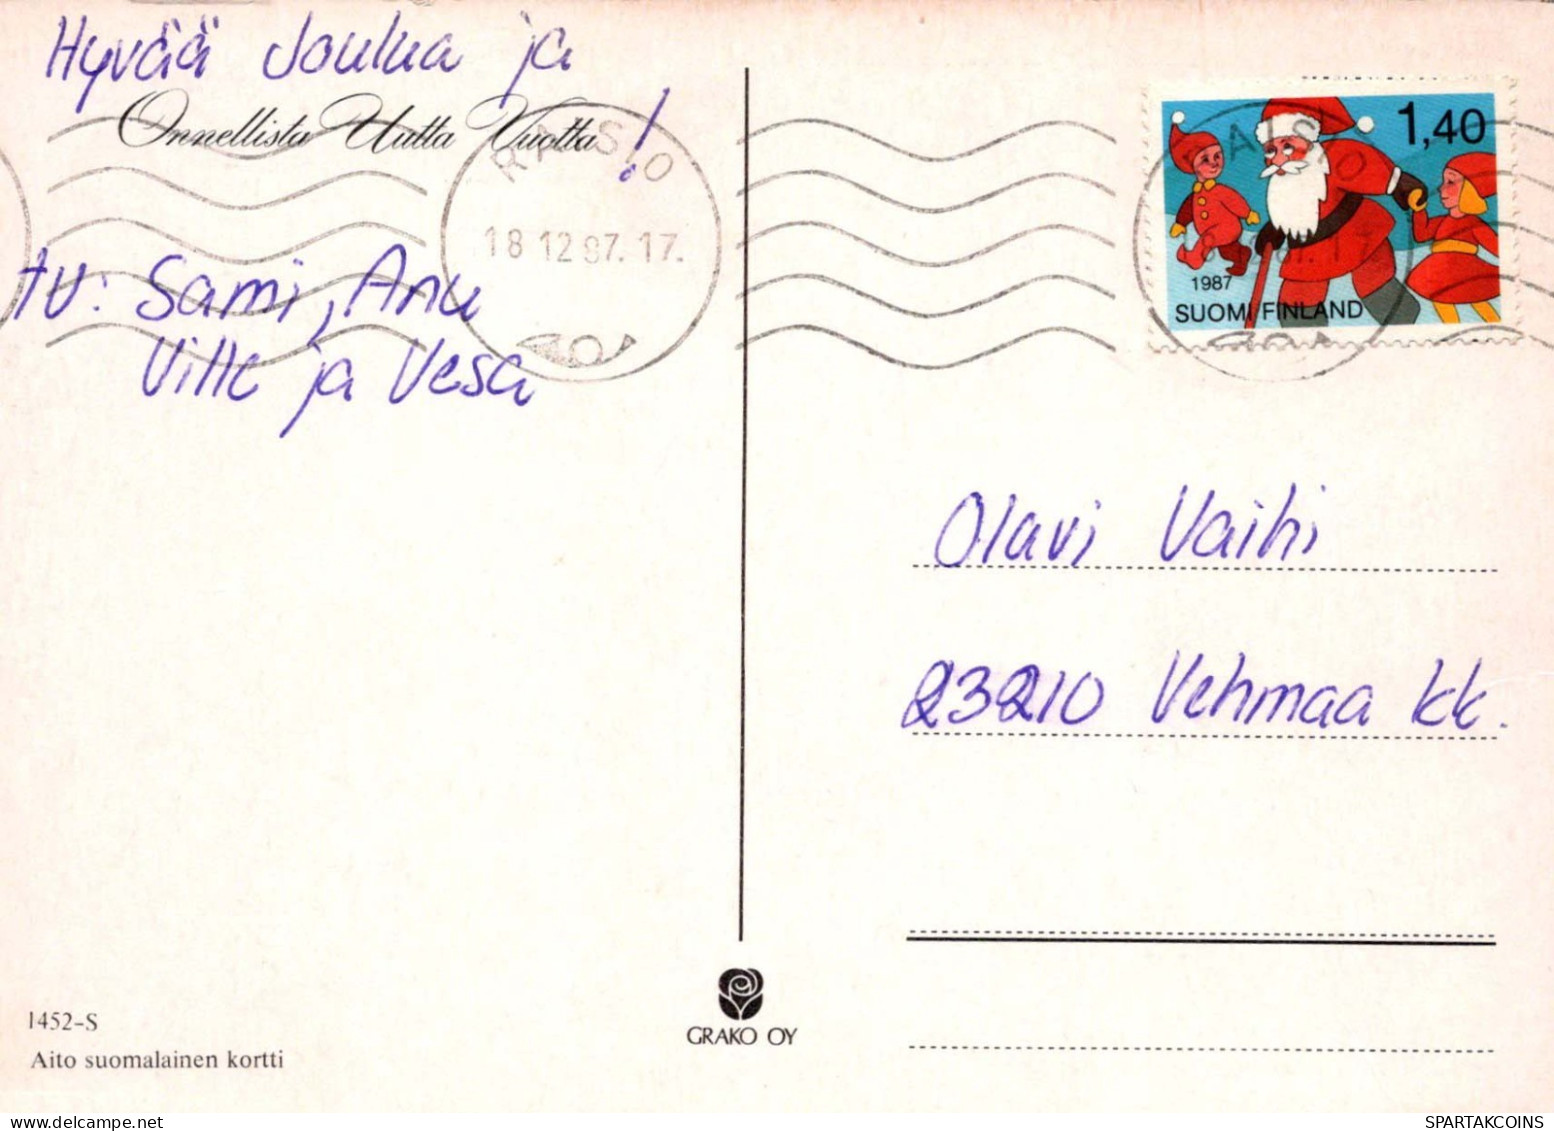 Buon Anno Natale BAMBINO CAVALLOSHOE Vintage Cartolina CPSM #PAU066.IT - Nieuwjaar